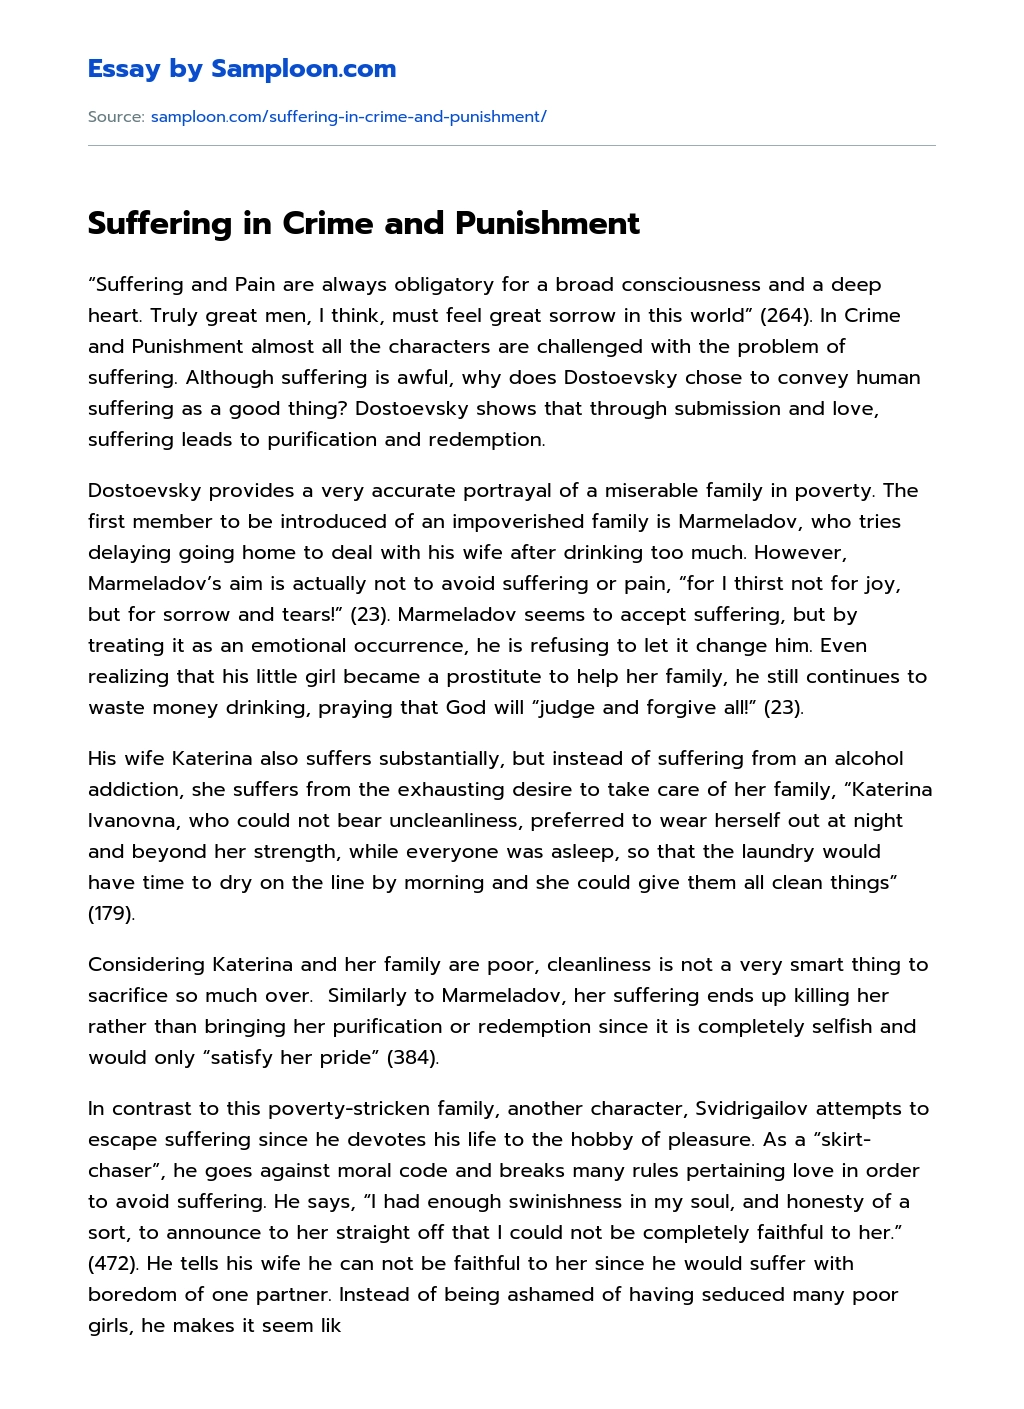 Suffering in Crime and Punishment essay